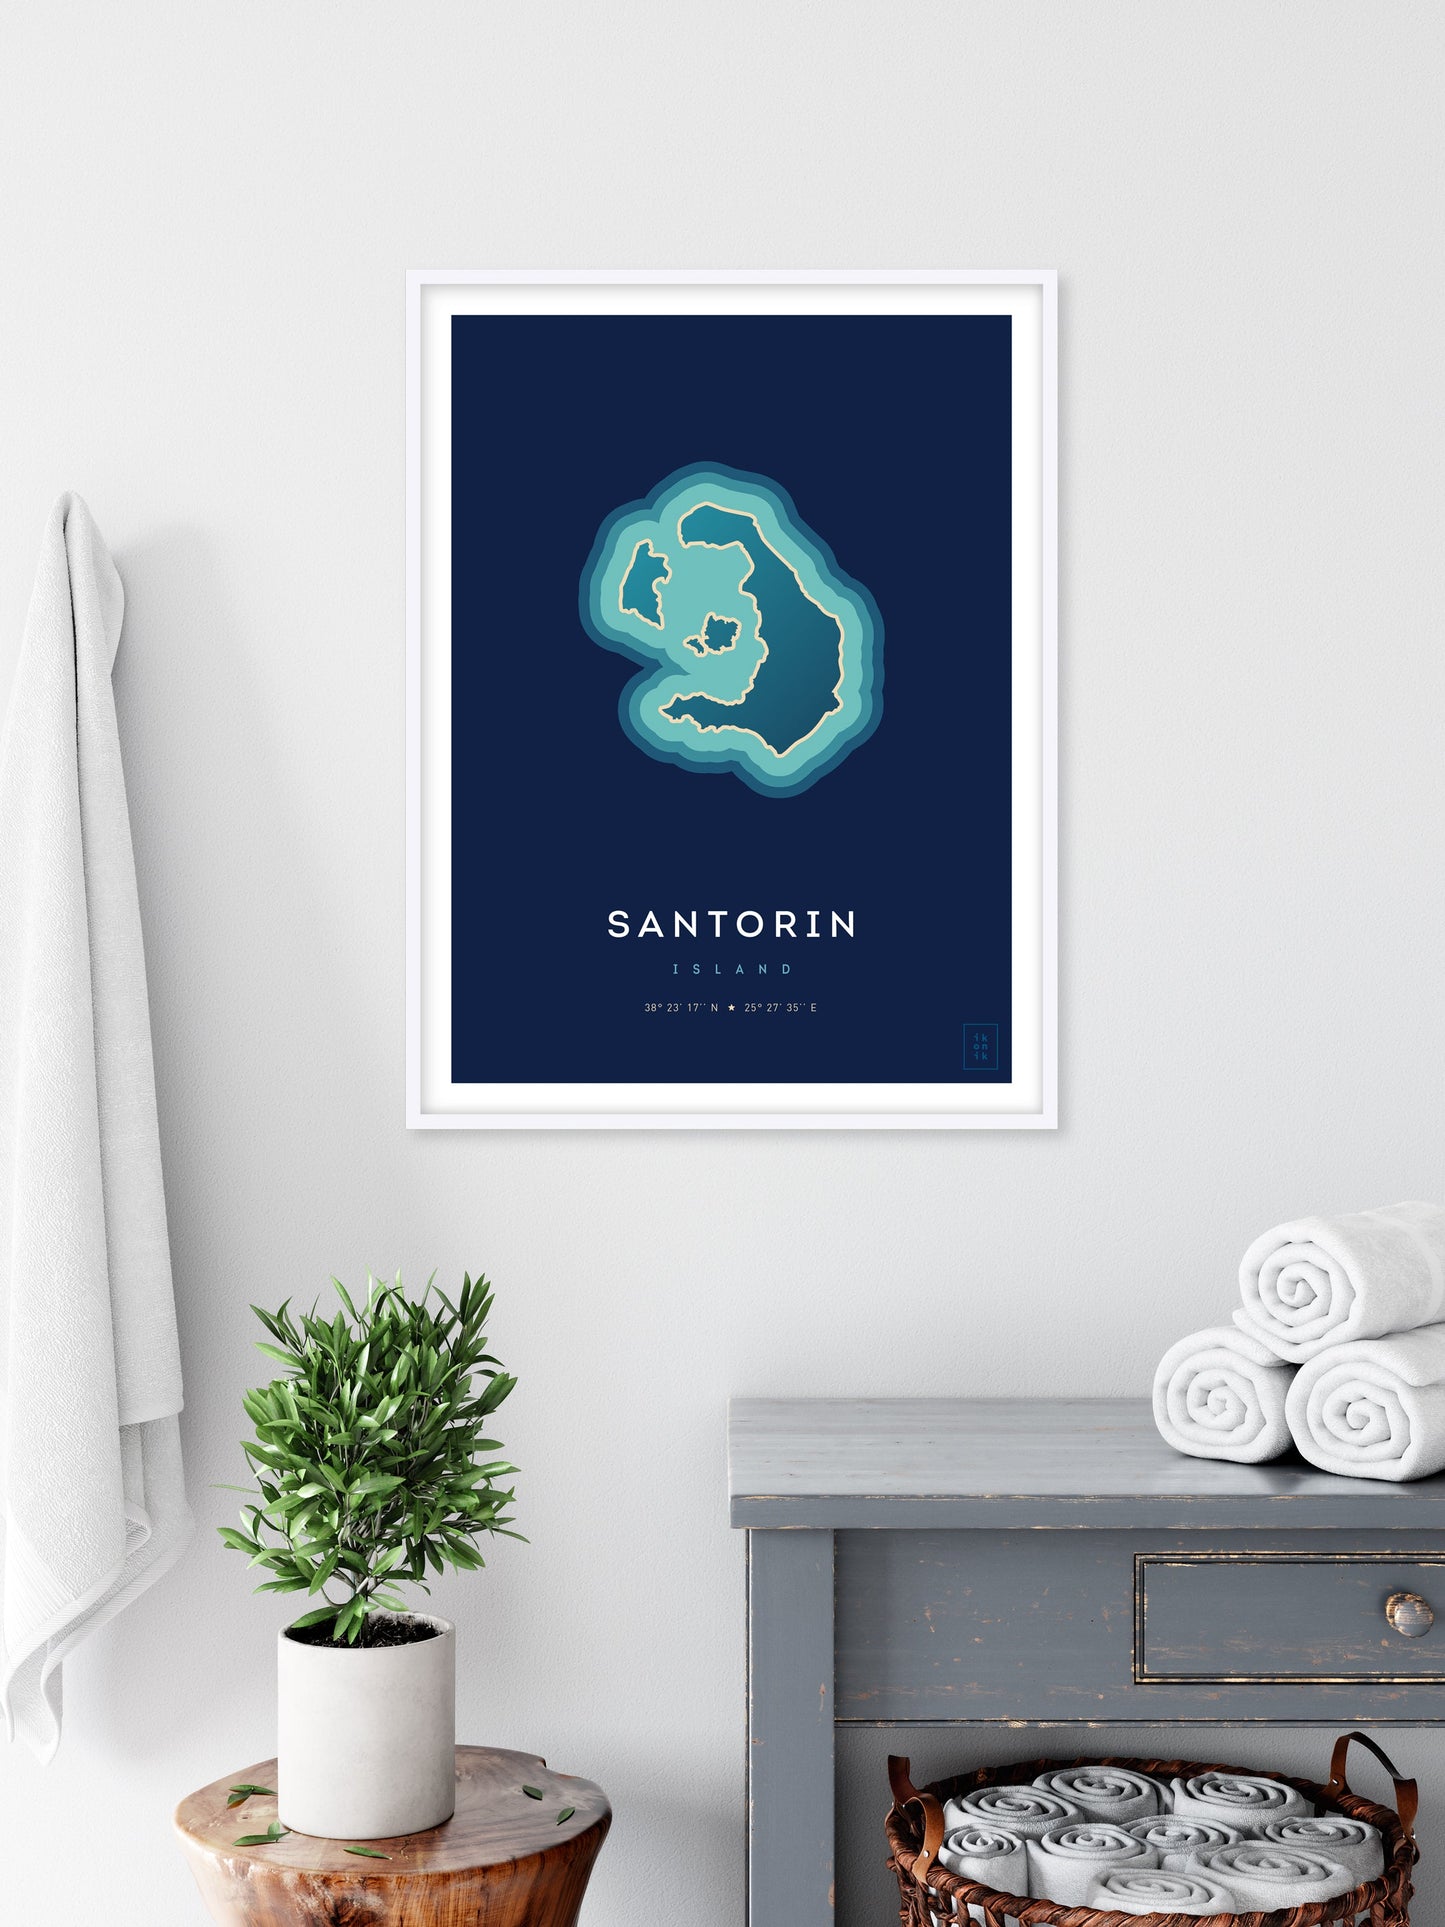 Santorini island poster